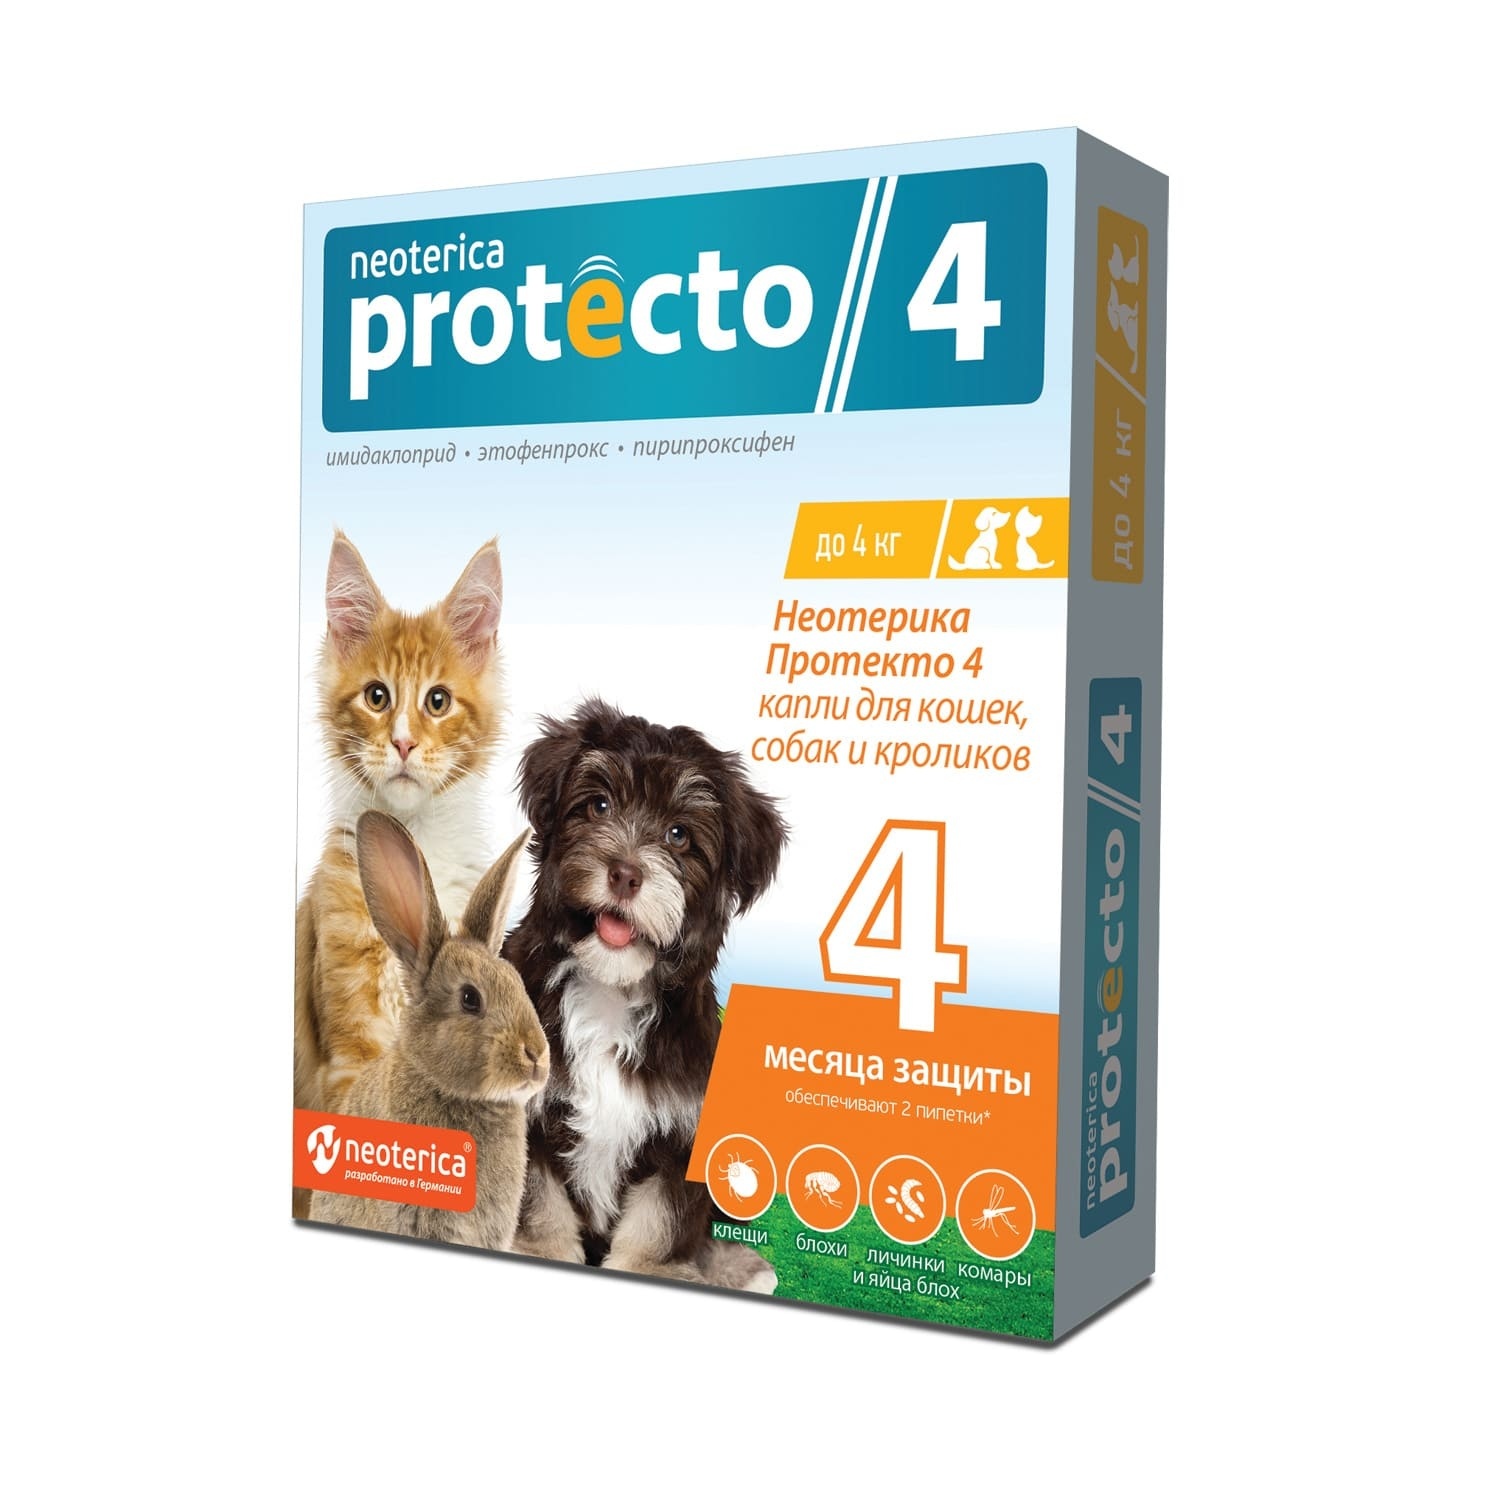 Neoterica Protecto Neoterica Protecto капли от блох и клещей для кошек и собак до 4 кг, 2 шт. (56 г)